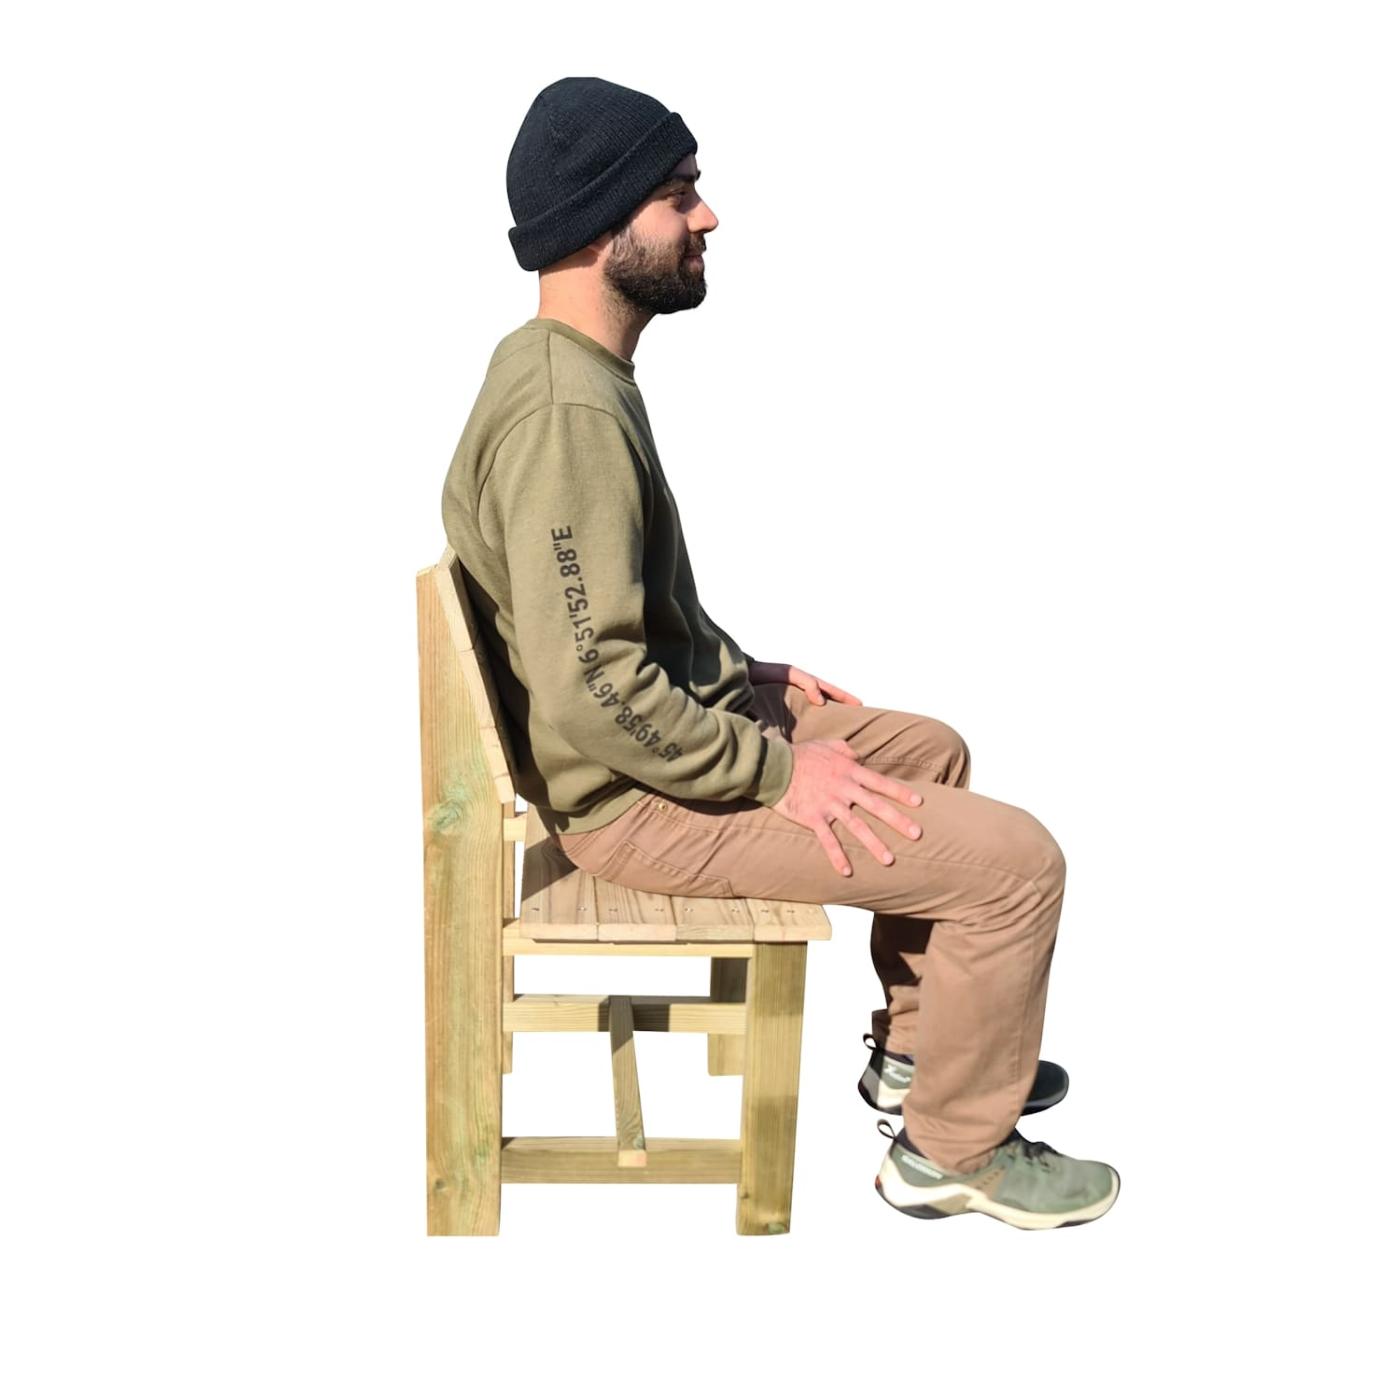 Conjunto de 4 sillas de madera de exterior MASGAMES BATEA